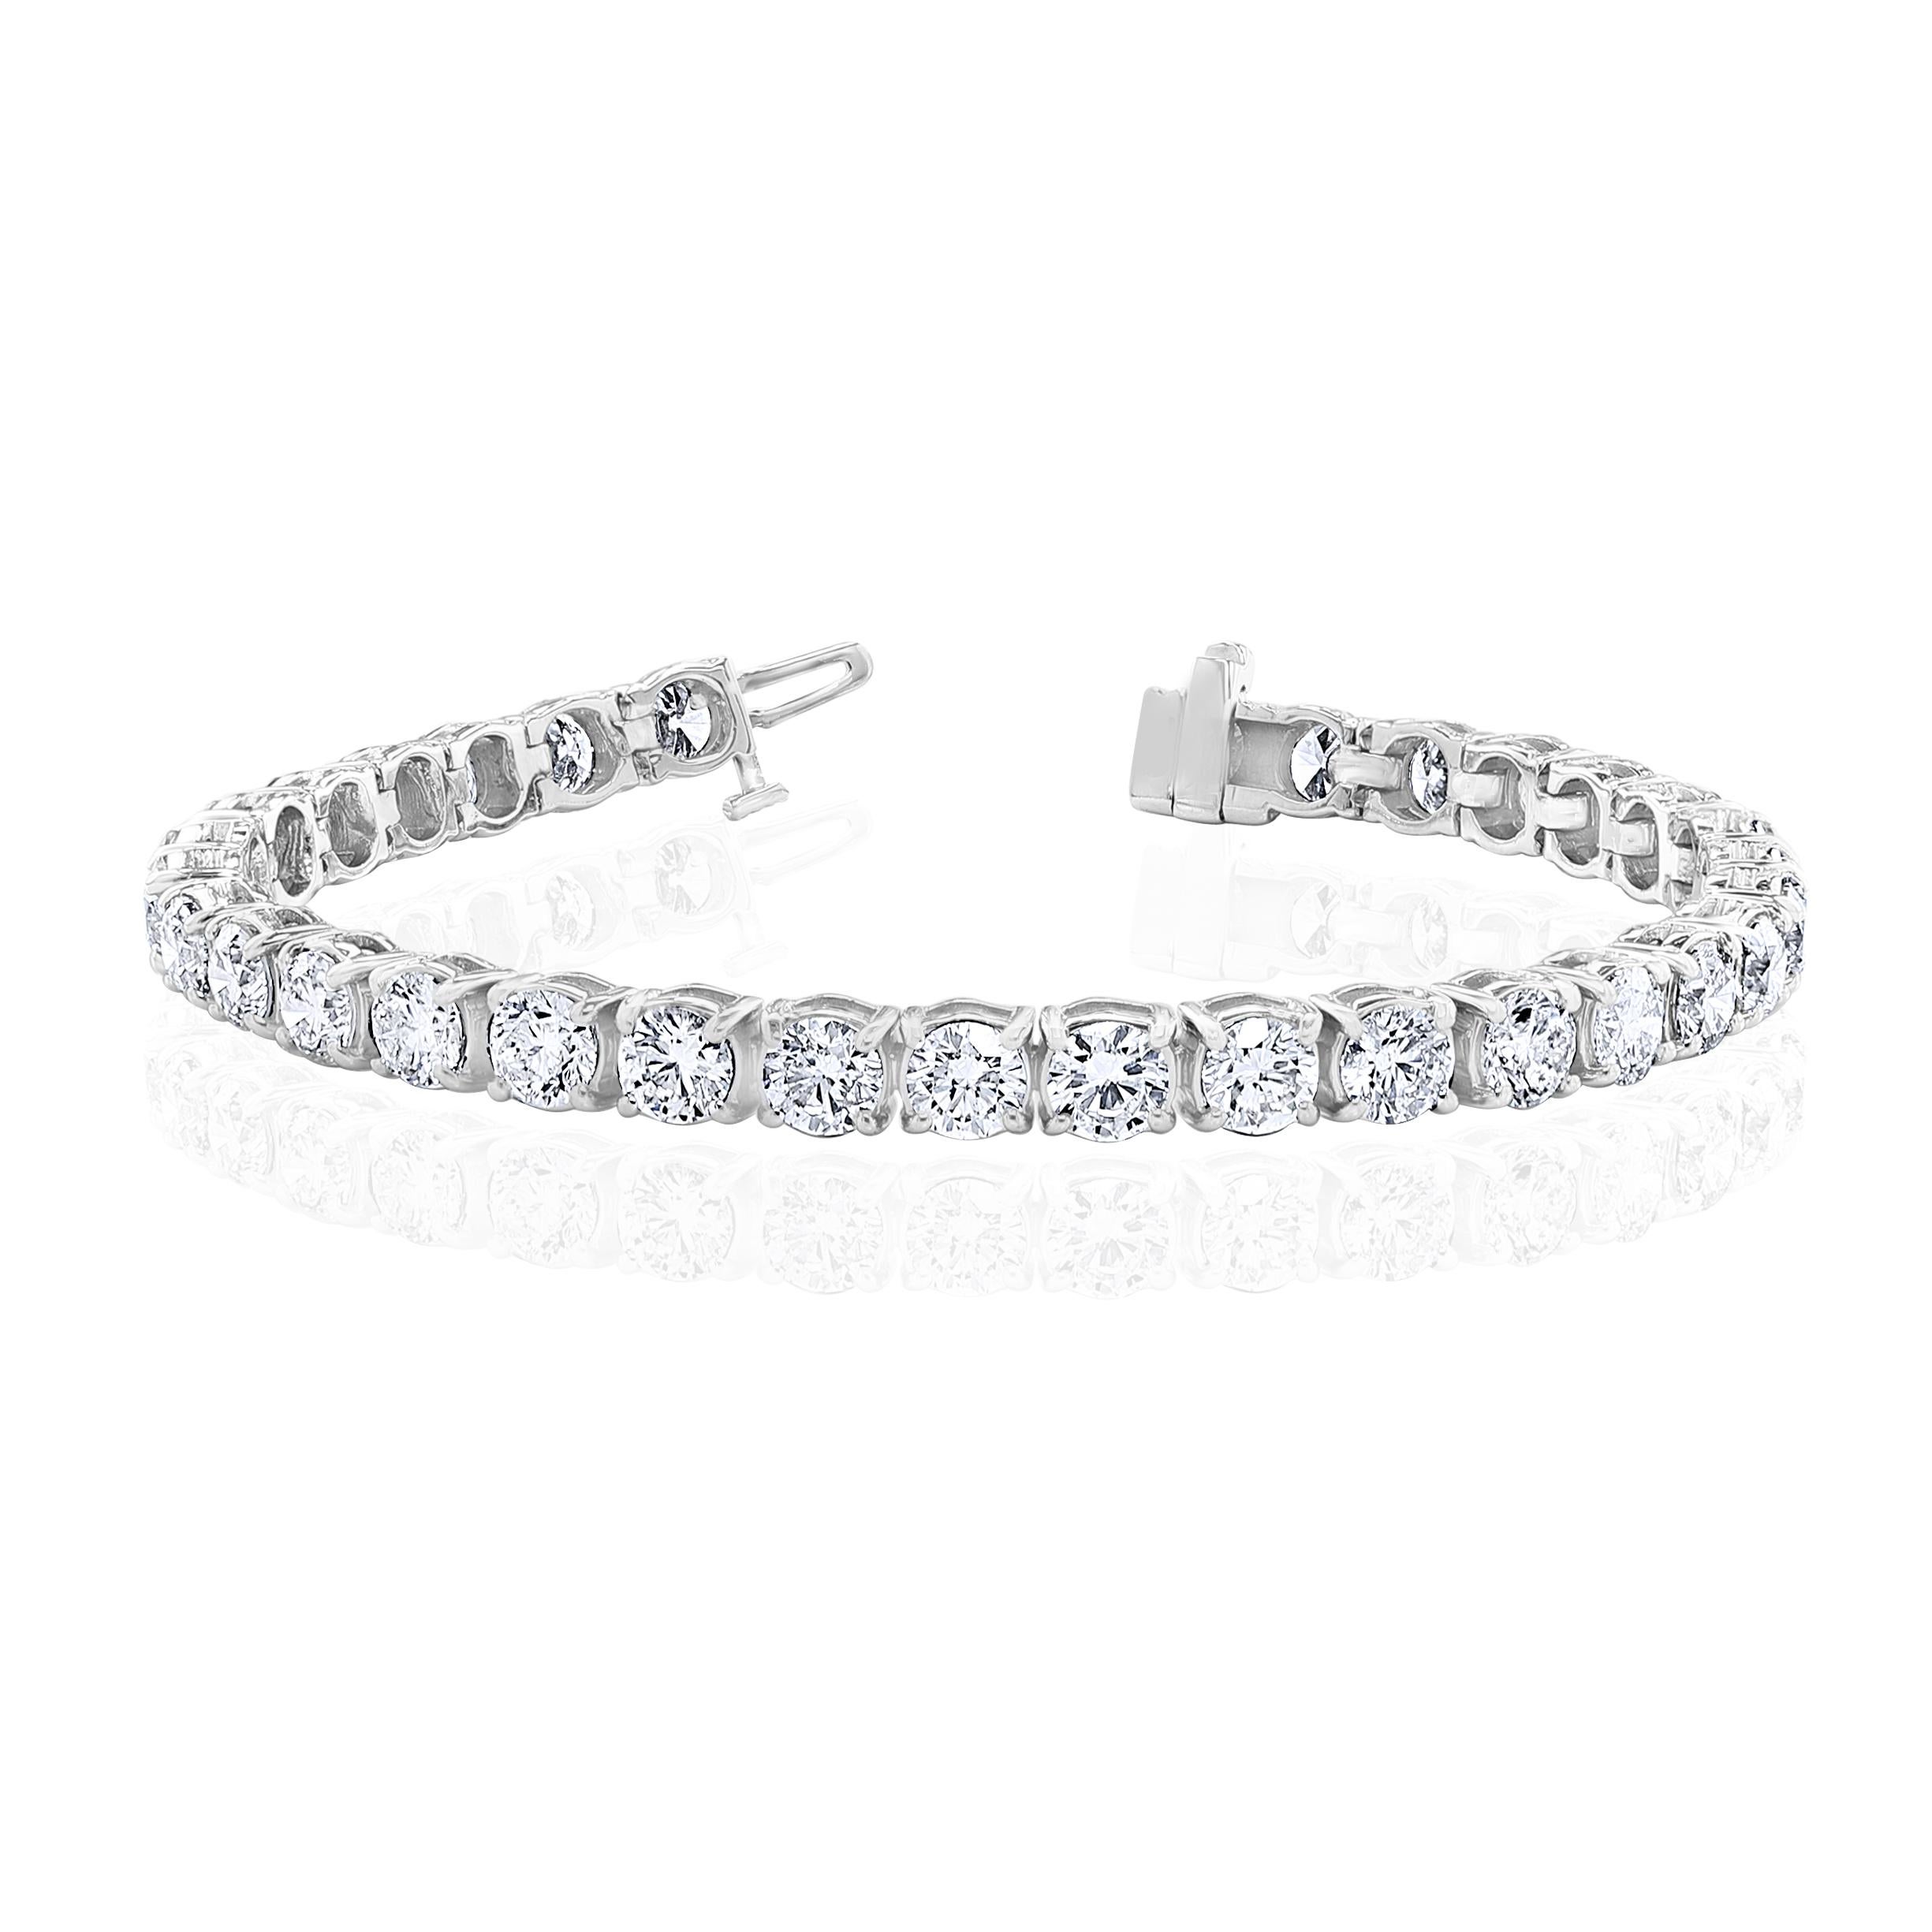 10 carat tennis bracelet price